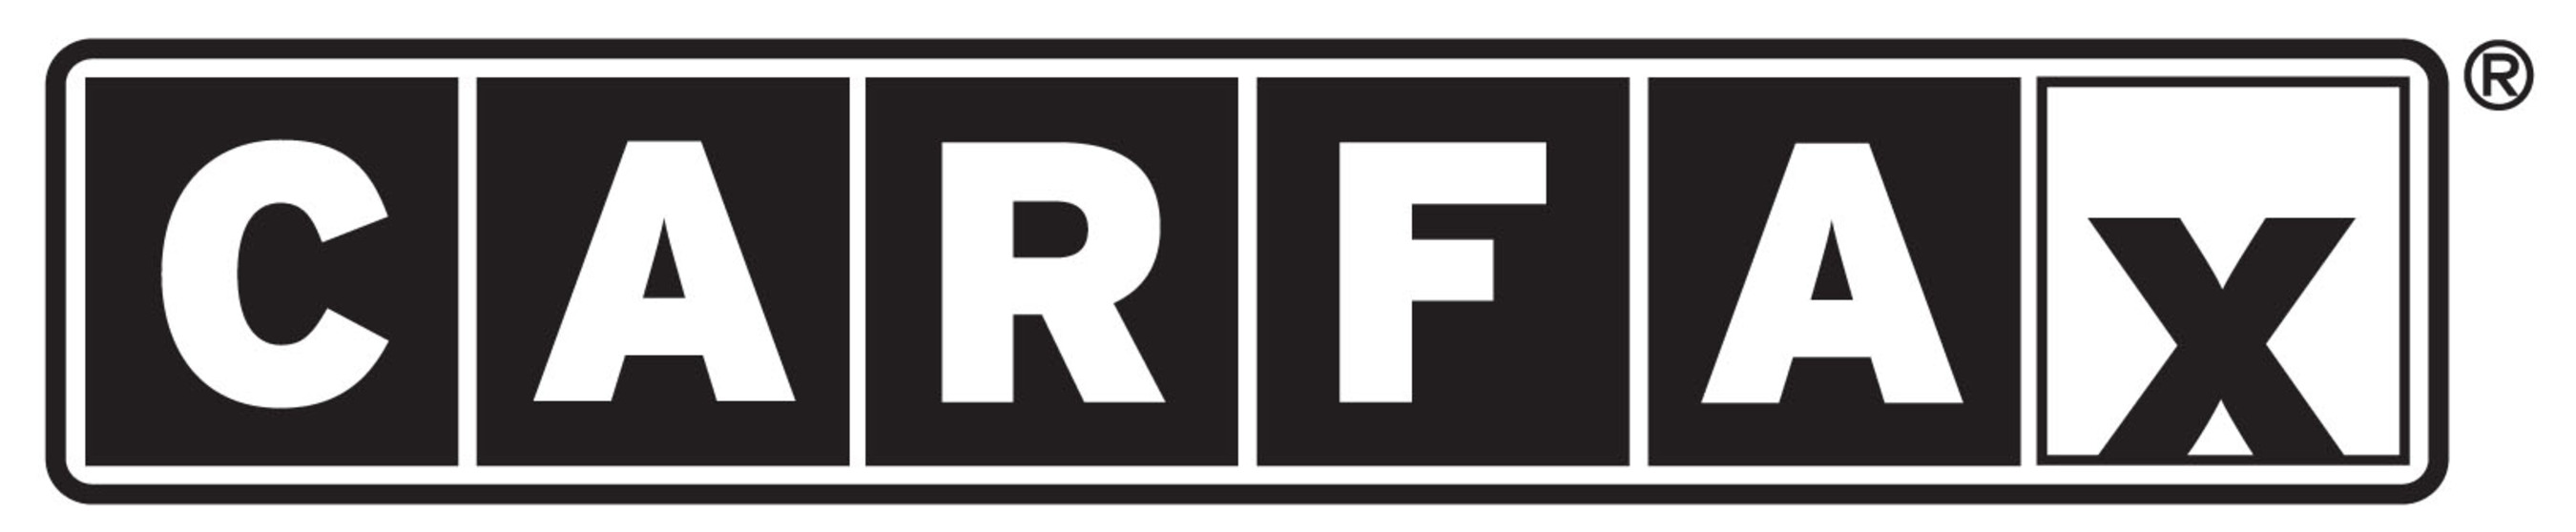 Carfax logo. (PRNewsFoto/Carfax) (PRNewsFoto/)